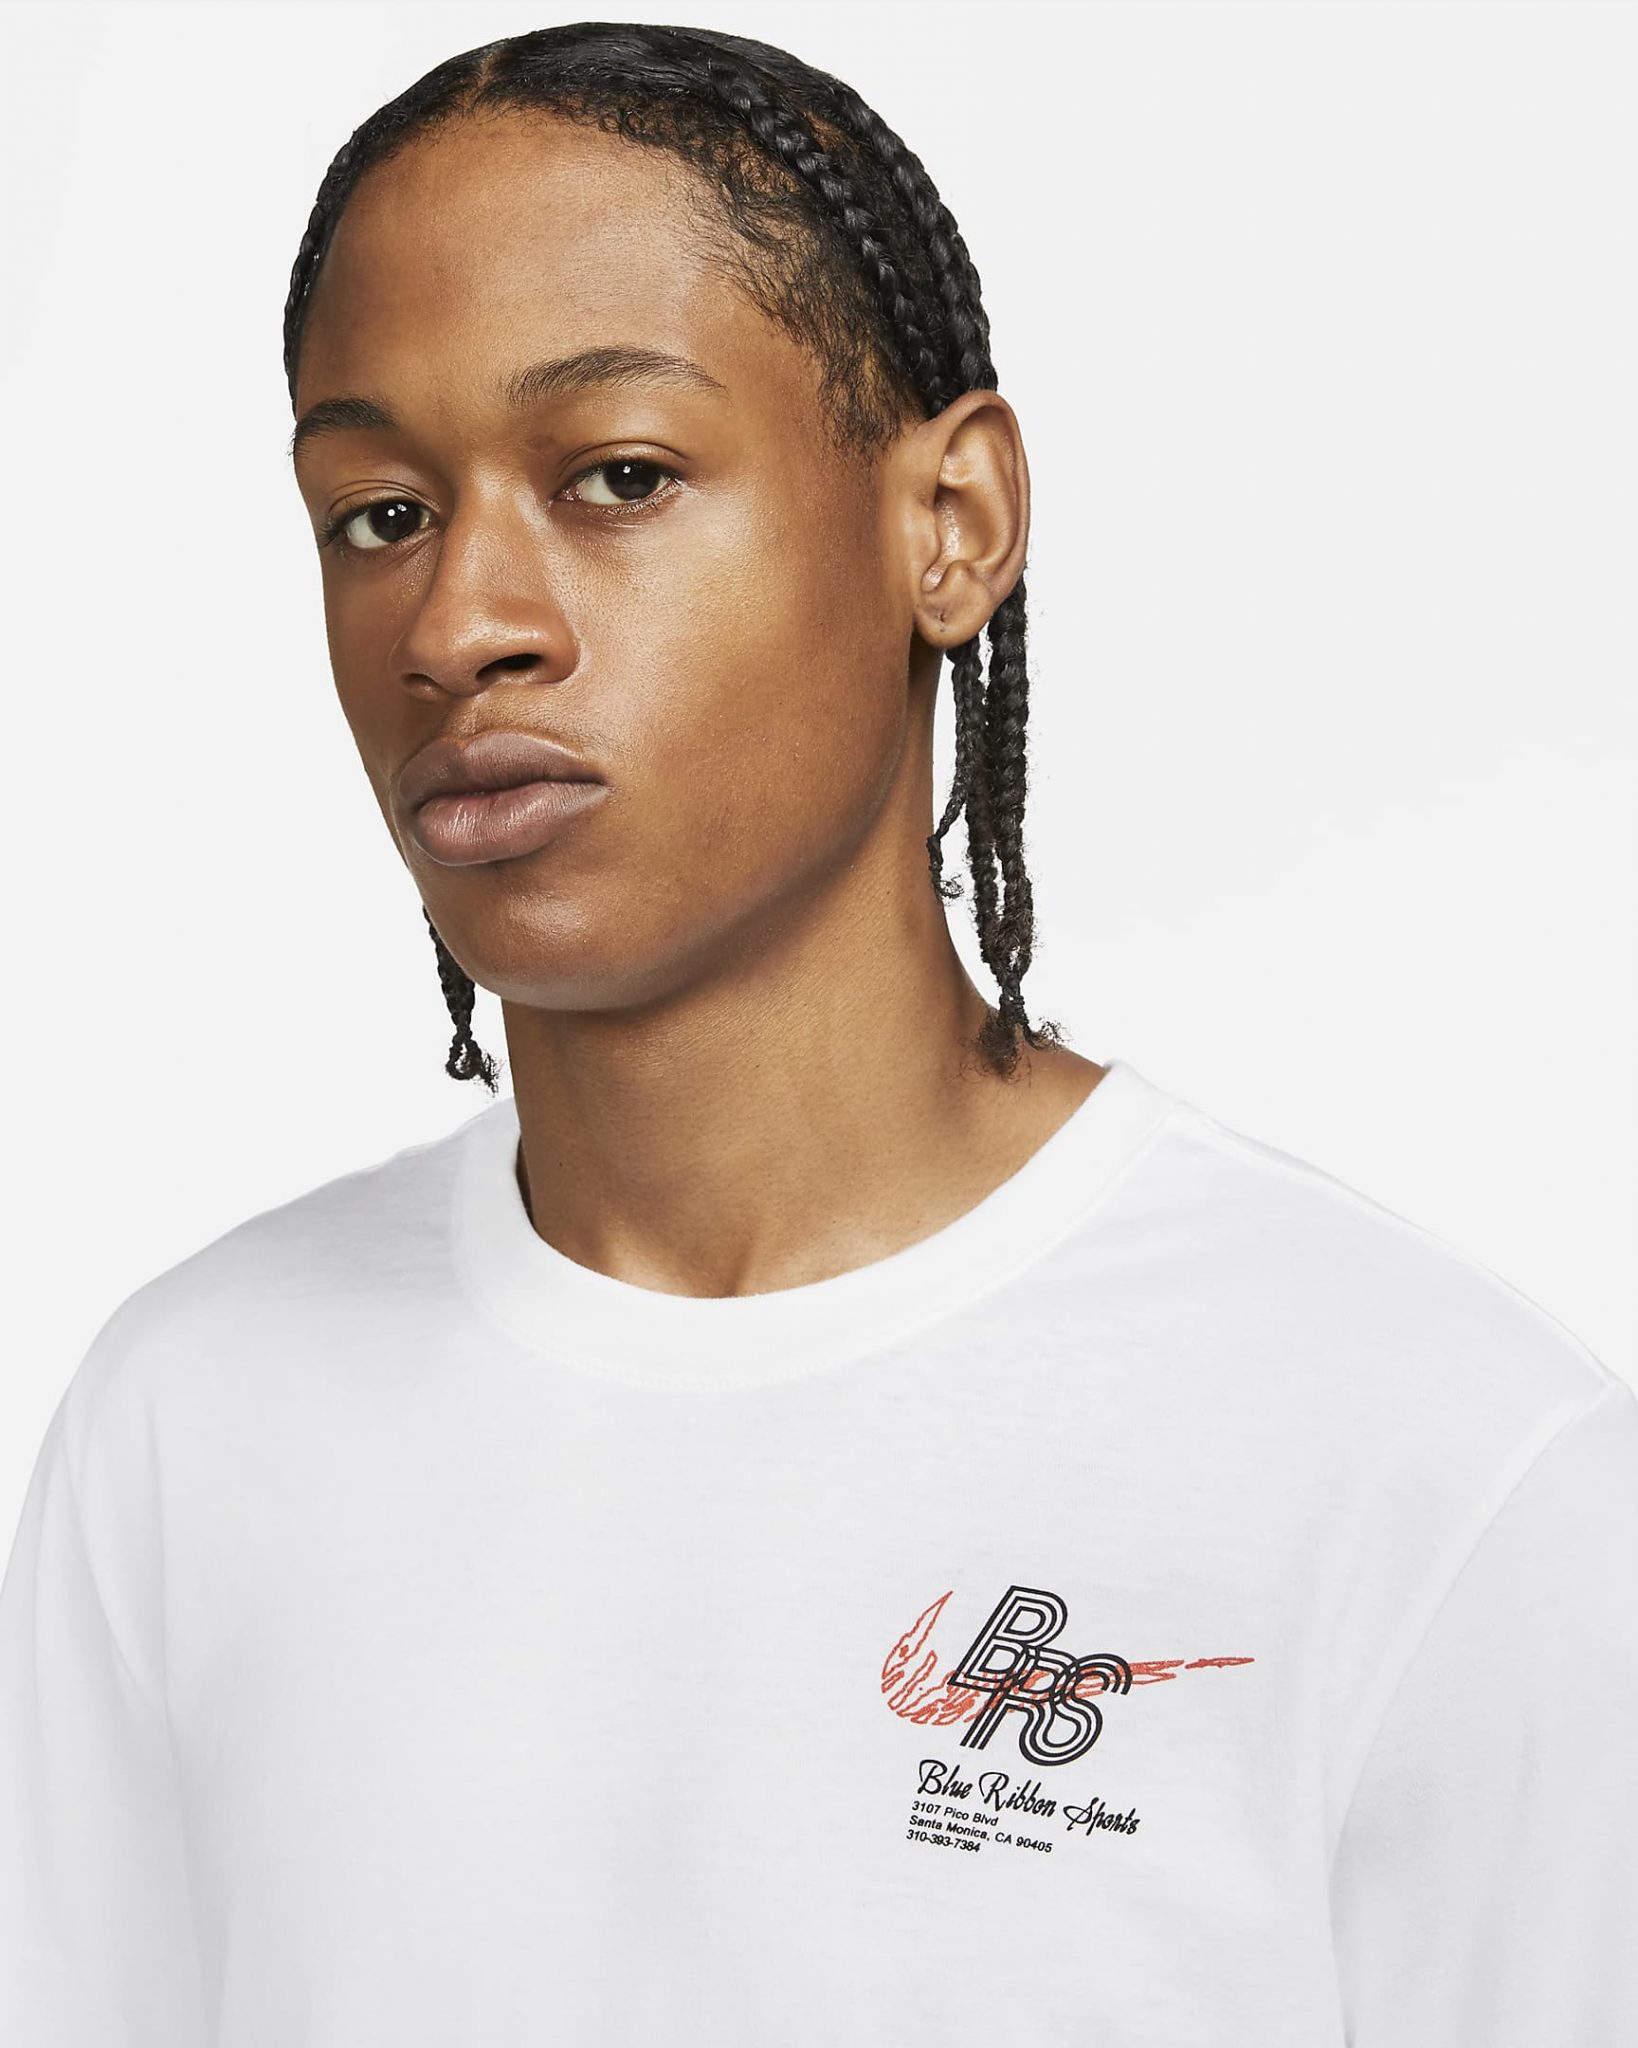 Nike Air Max BW Los Angeles Shirts Hats Clothing Outfits